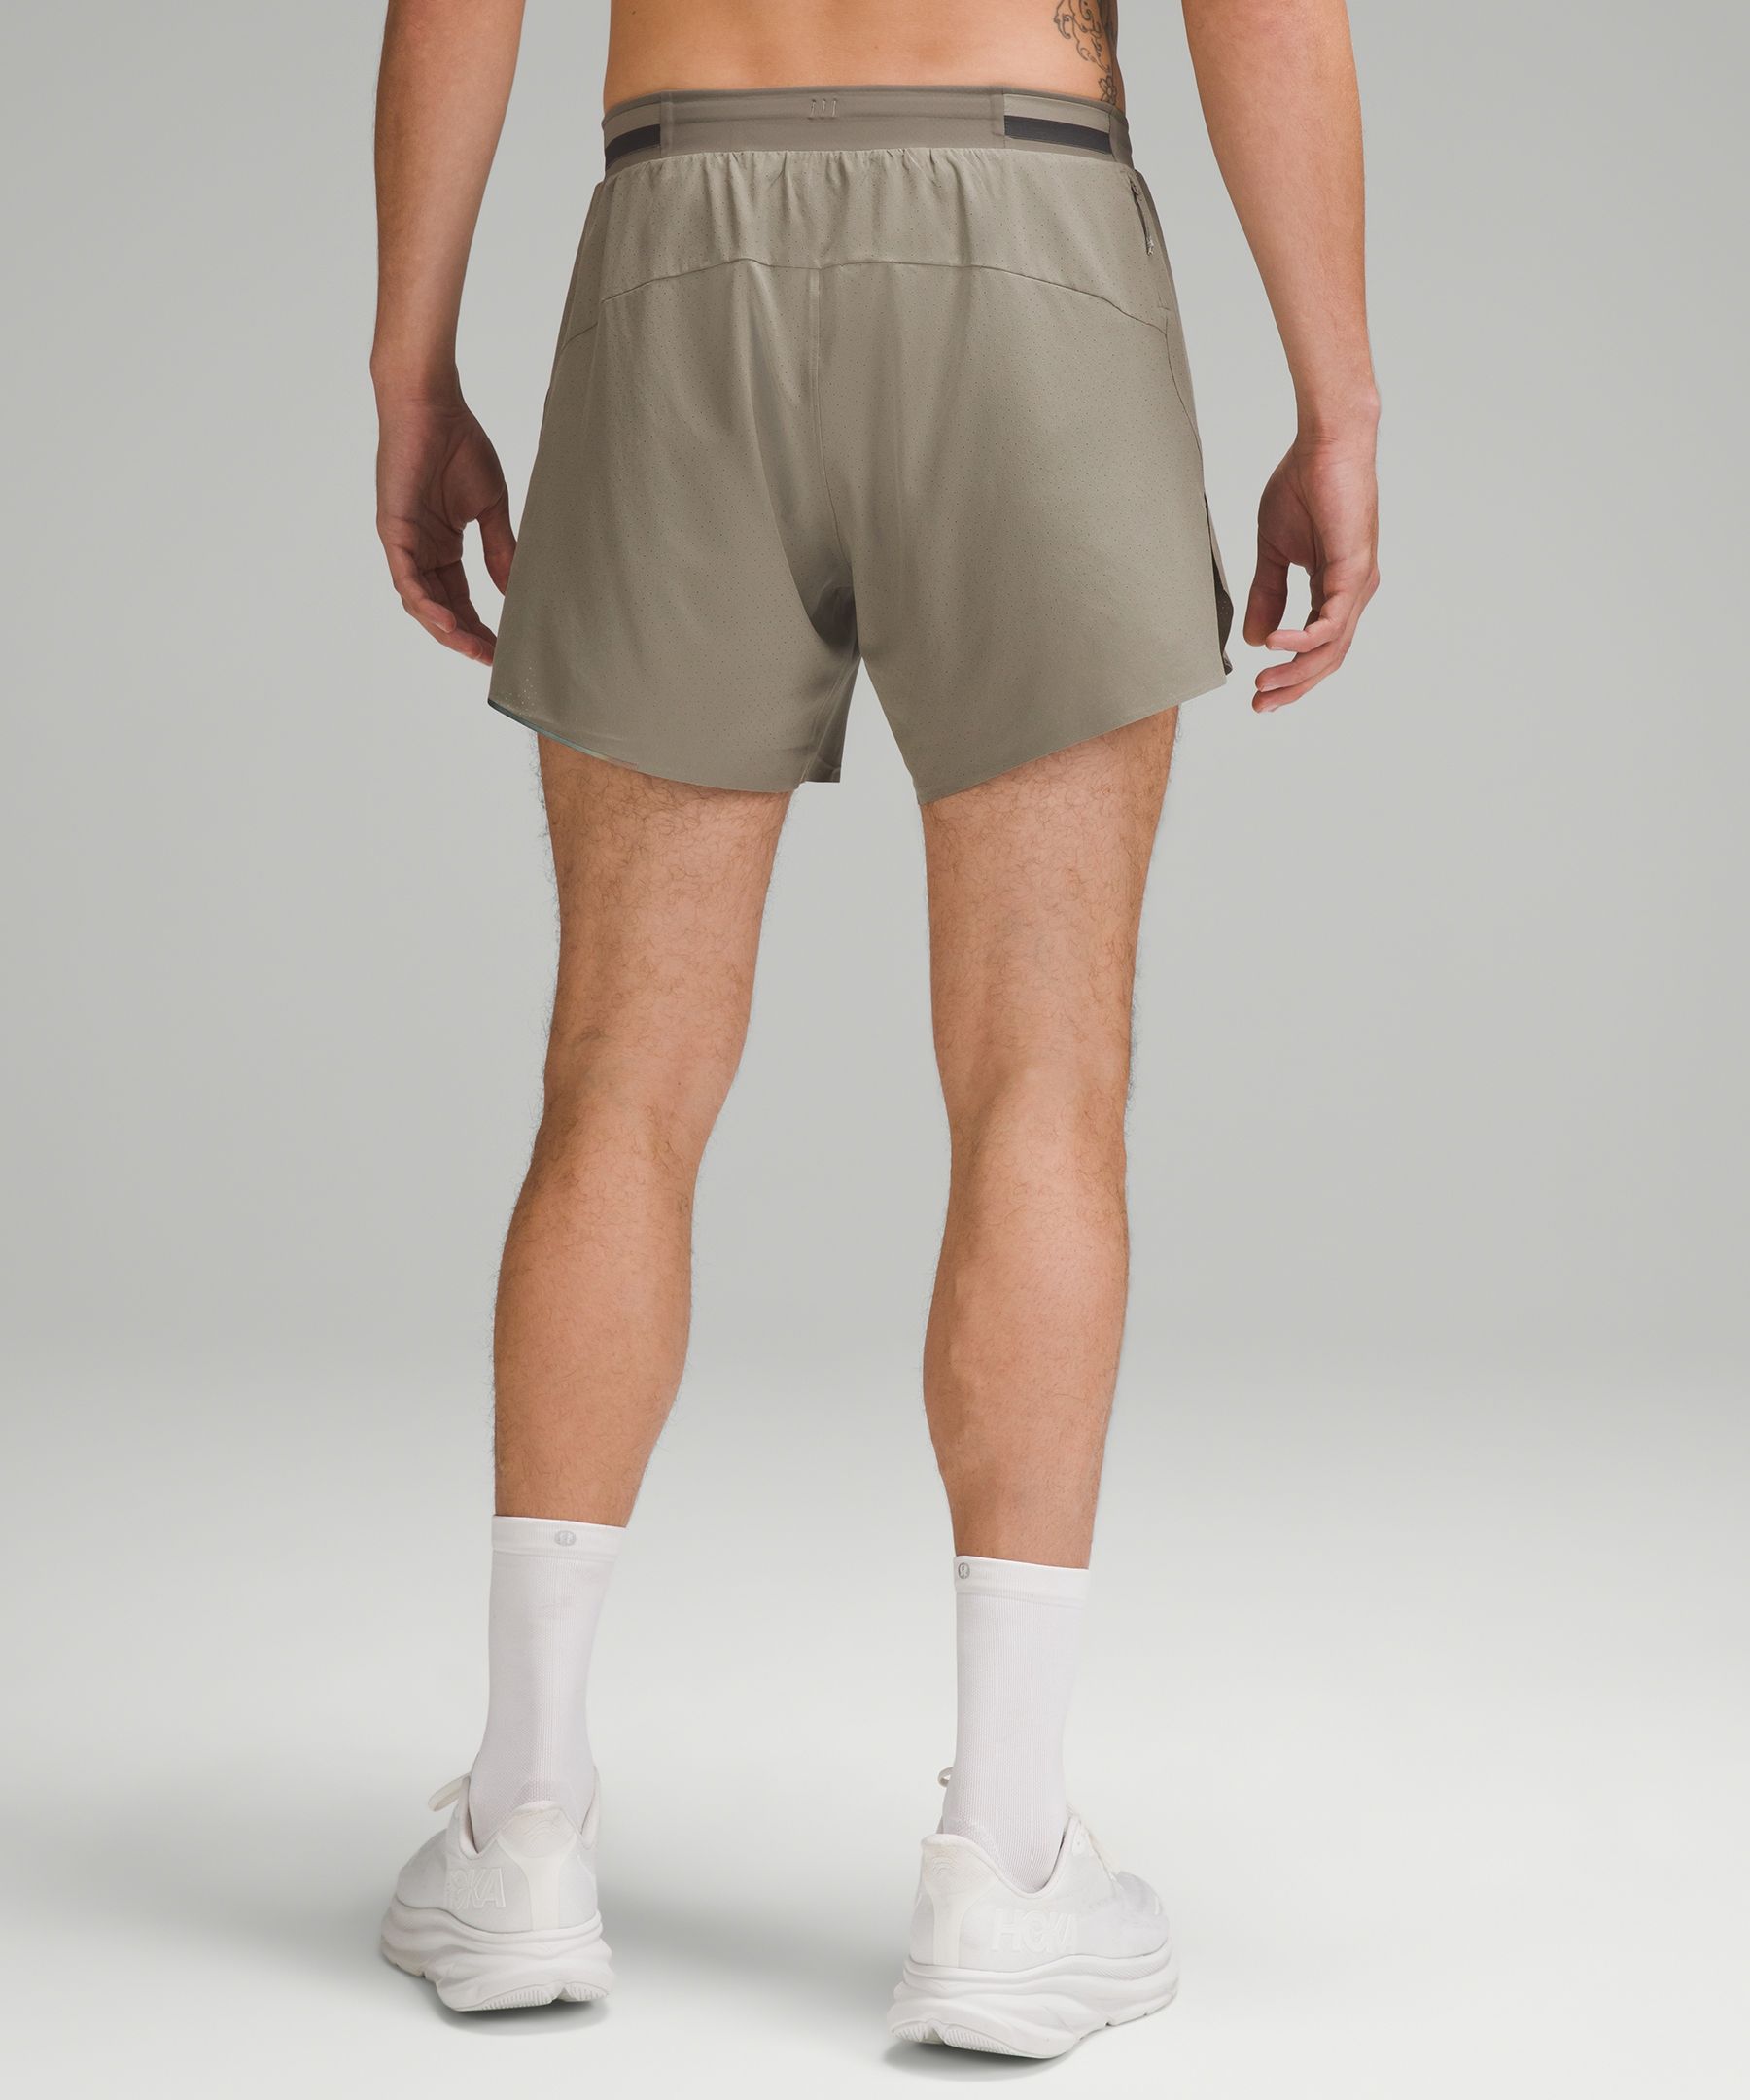 Lululemon Mens Lined Running Shorts Size M 4 Inseam gray back zip pocket